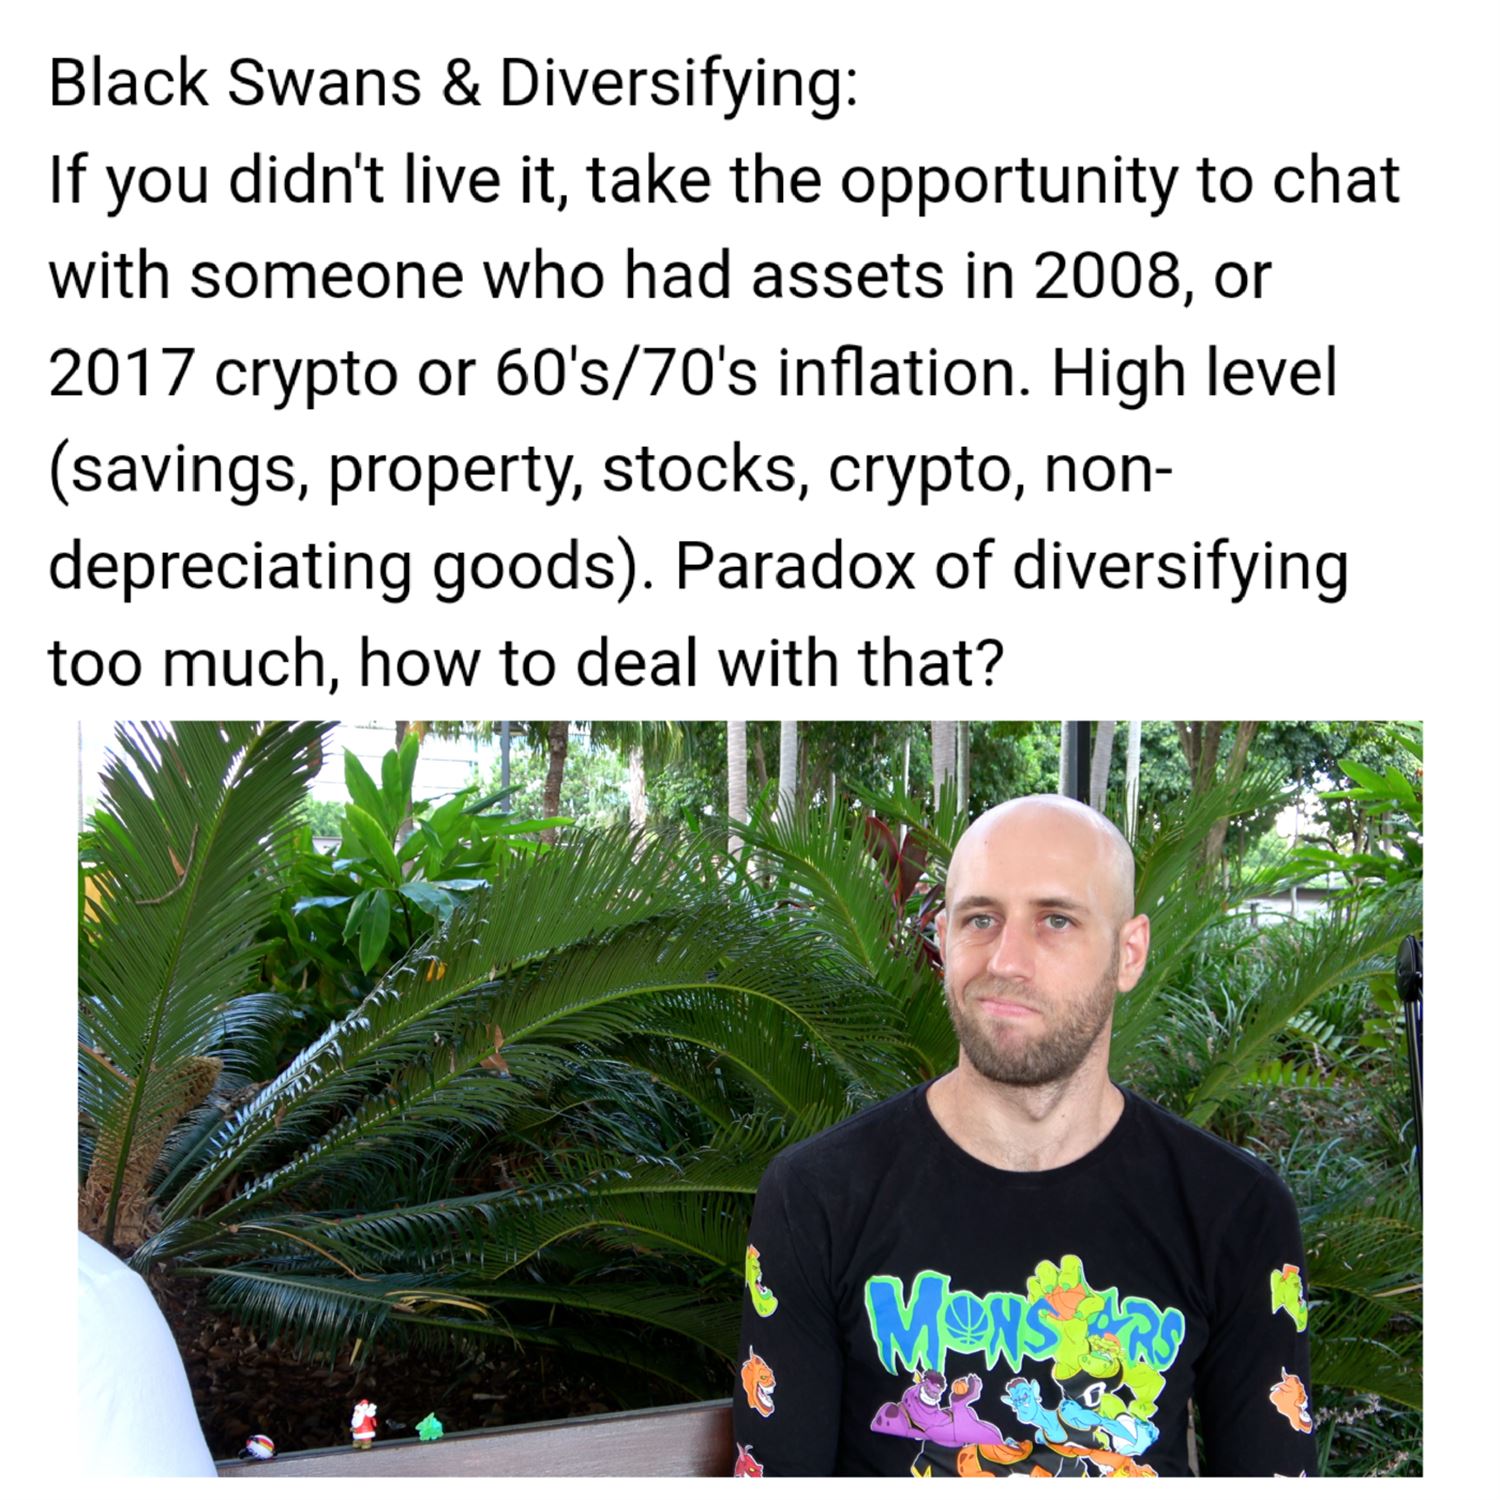 Black Swans and diversifying